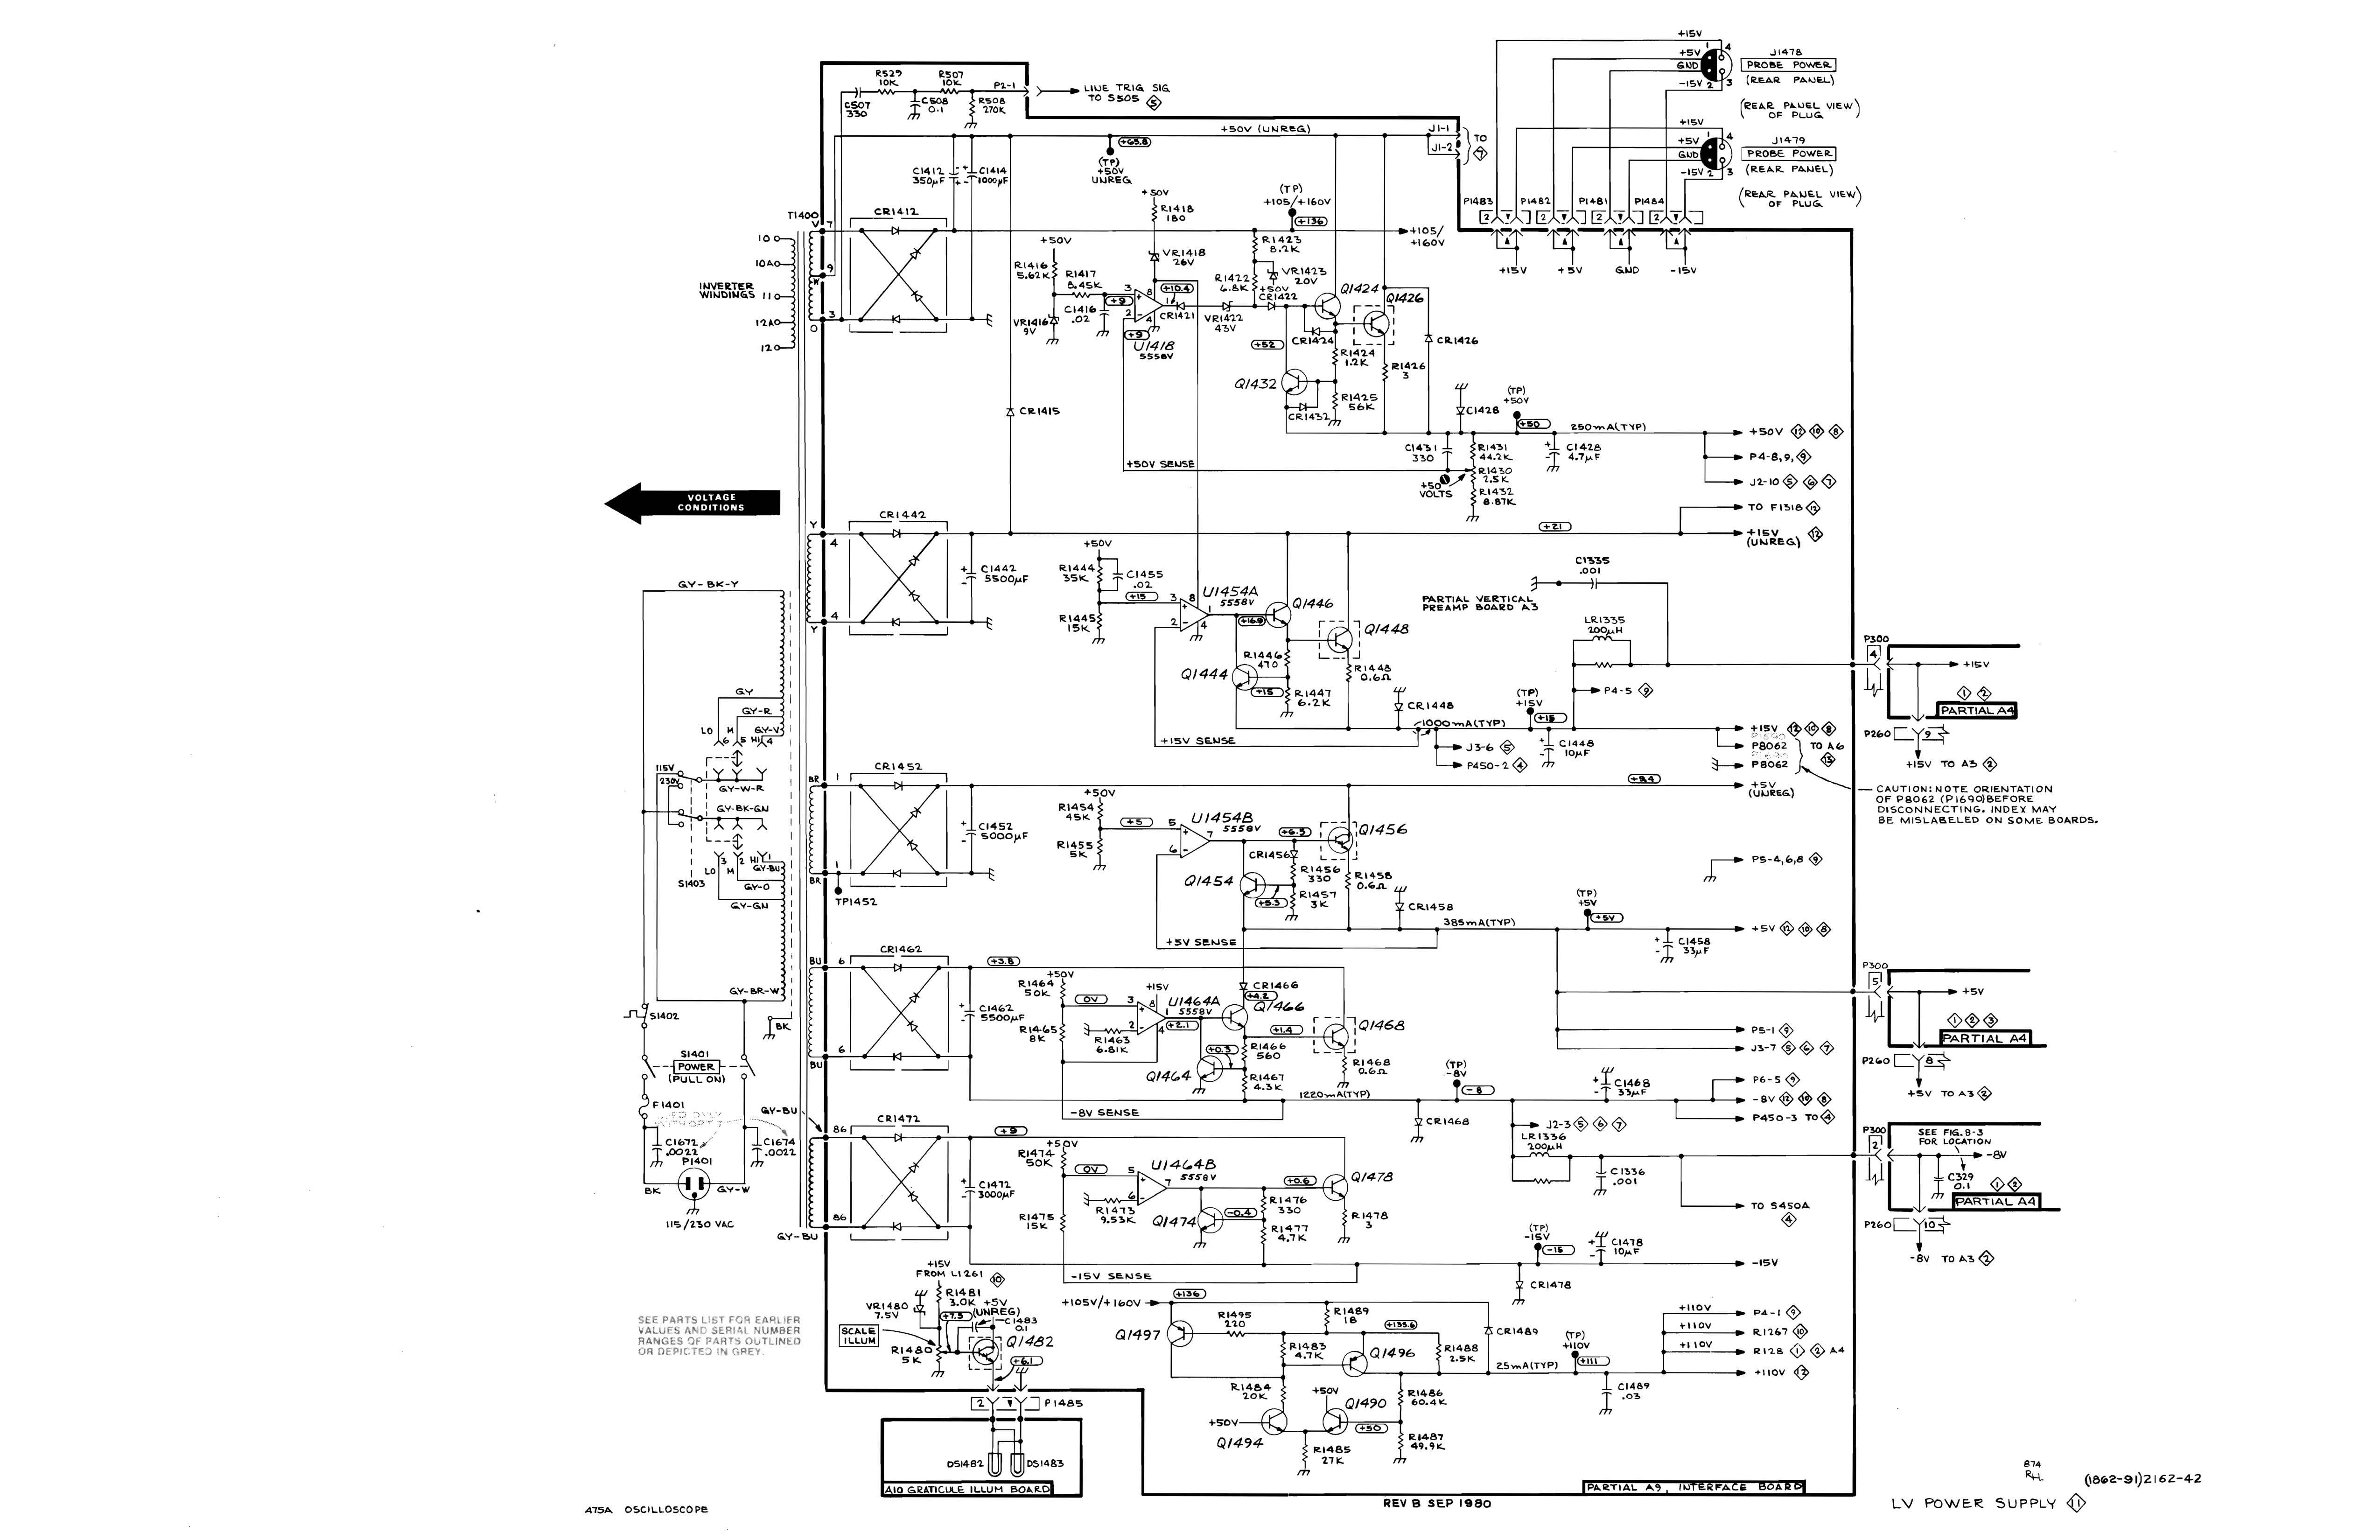 operating Manual With 17"x11" Diagrams CD Tektronix 475A Oscilloscope Service 